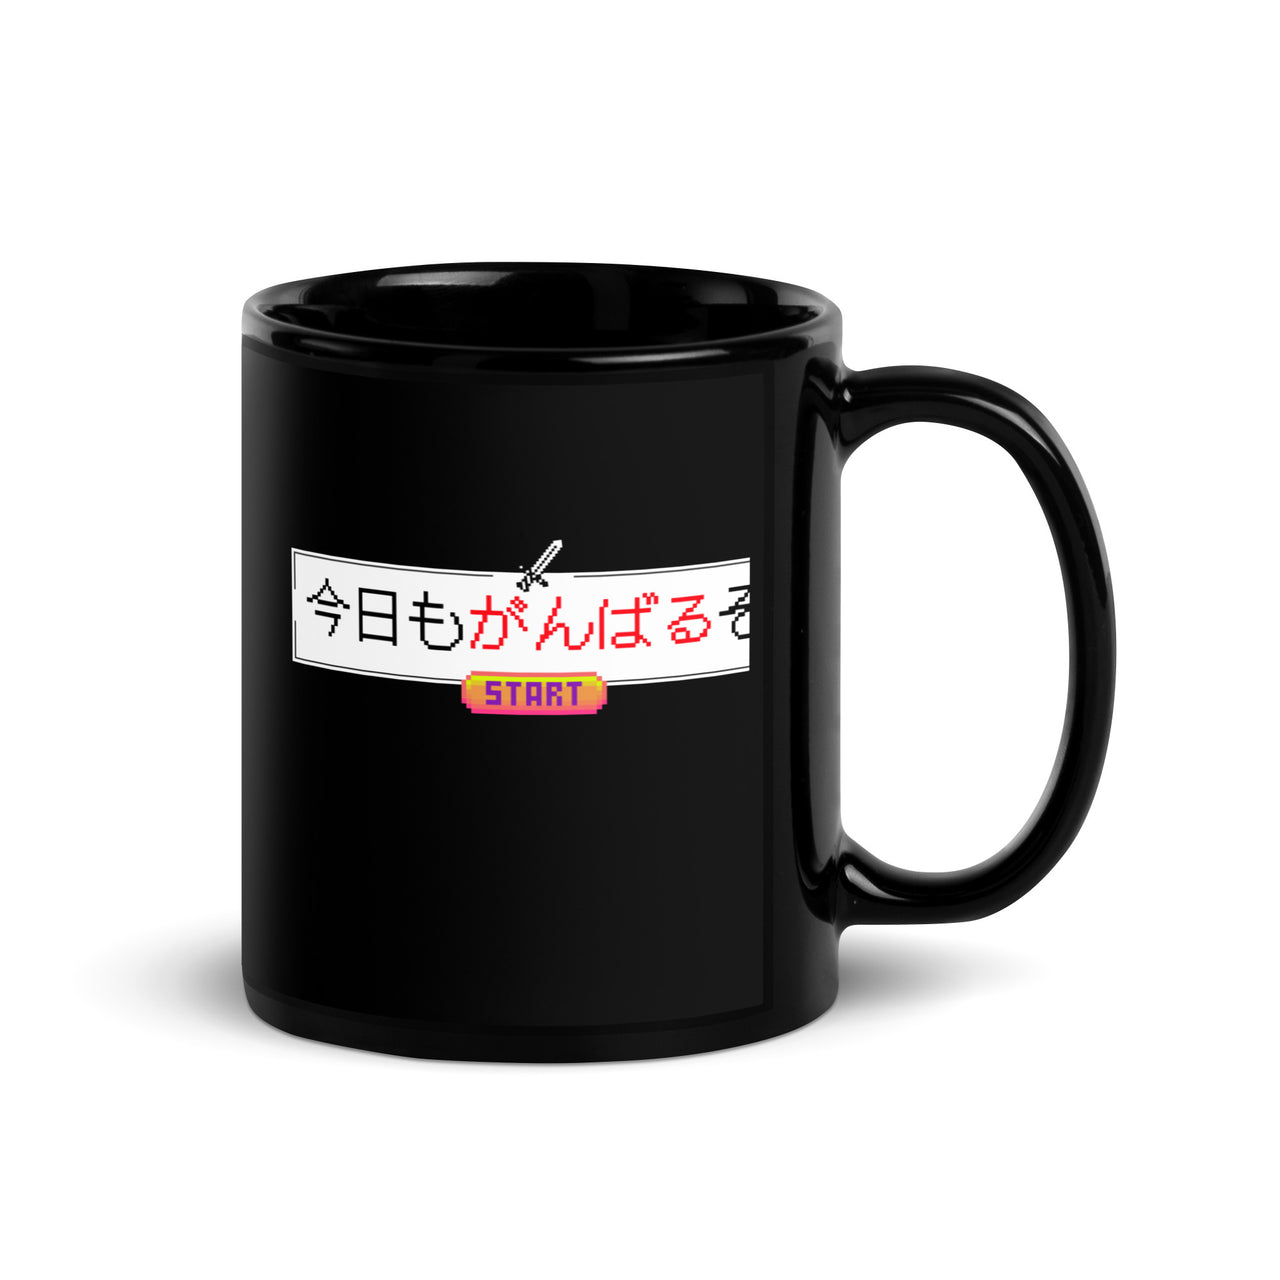 Press Start to Ganbaru - Retro Japanese-Themed Mug